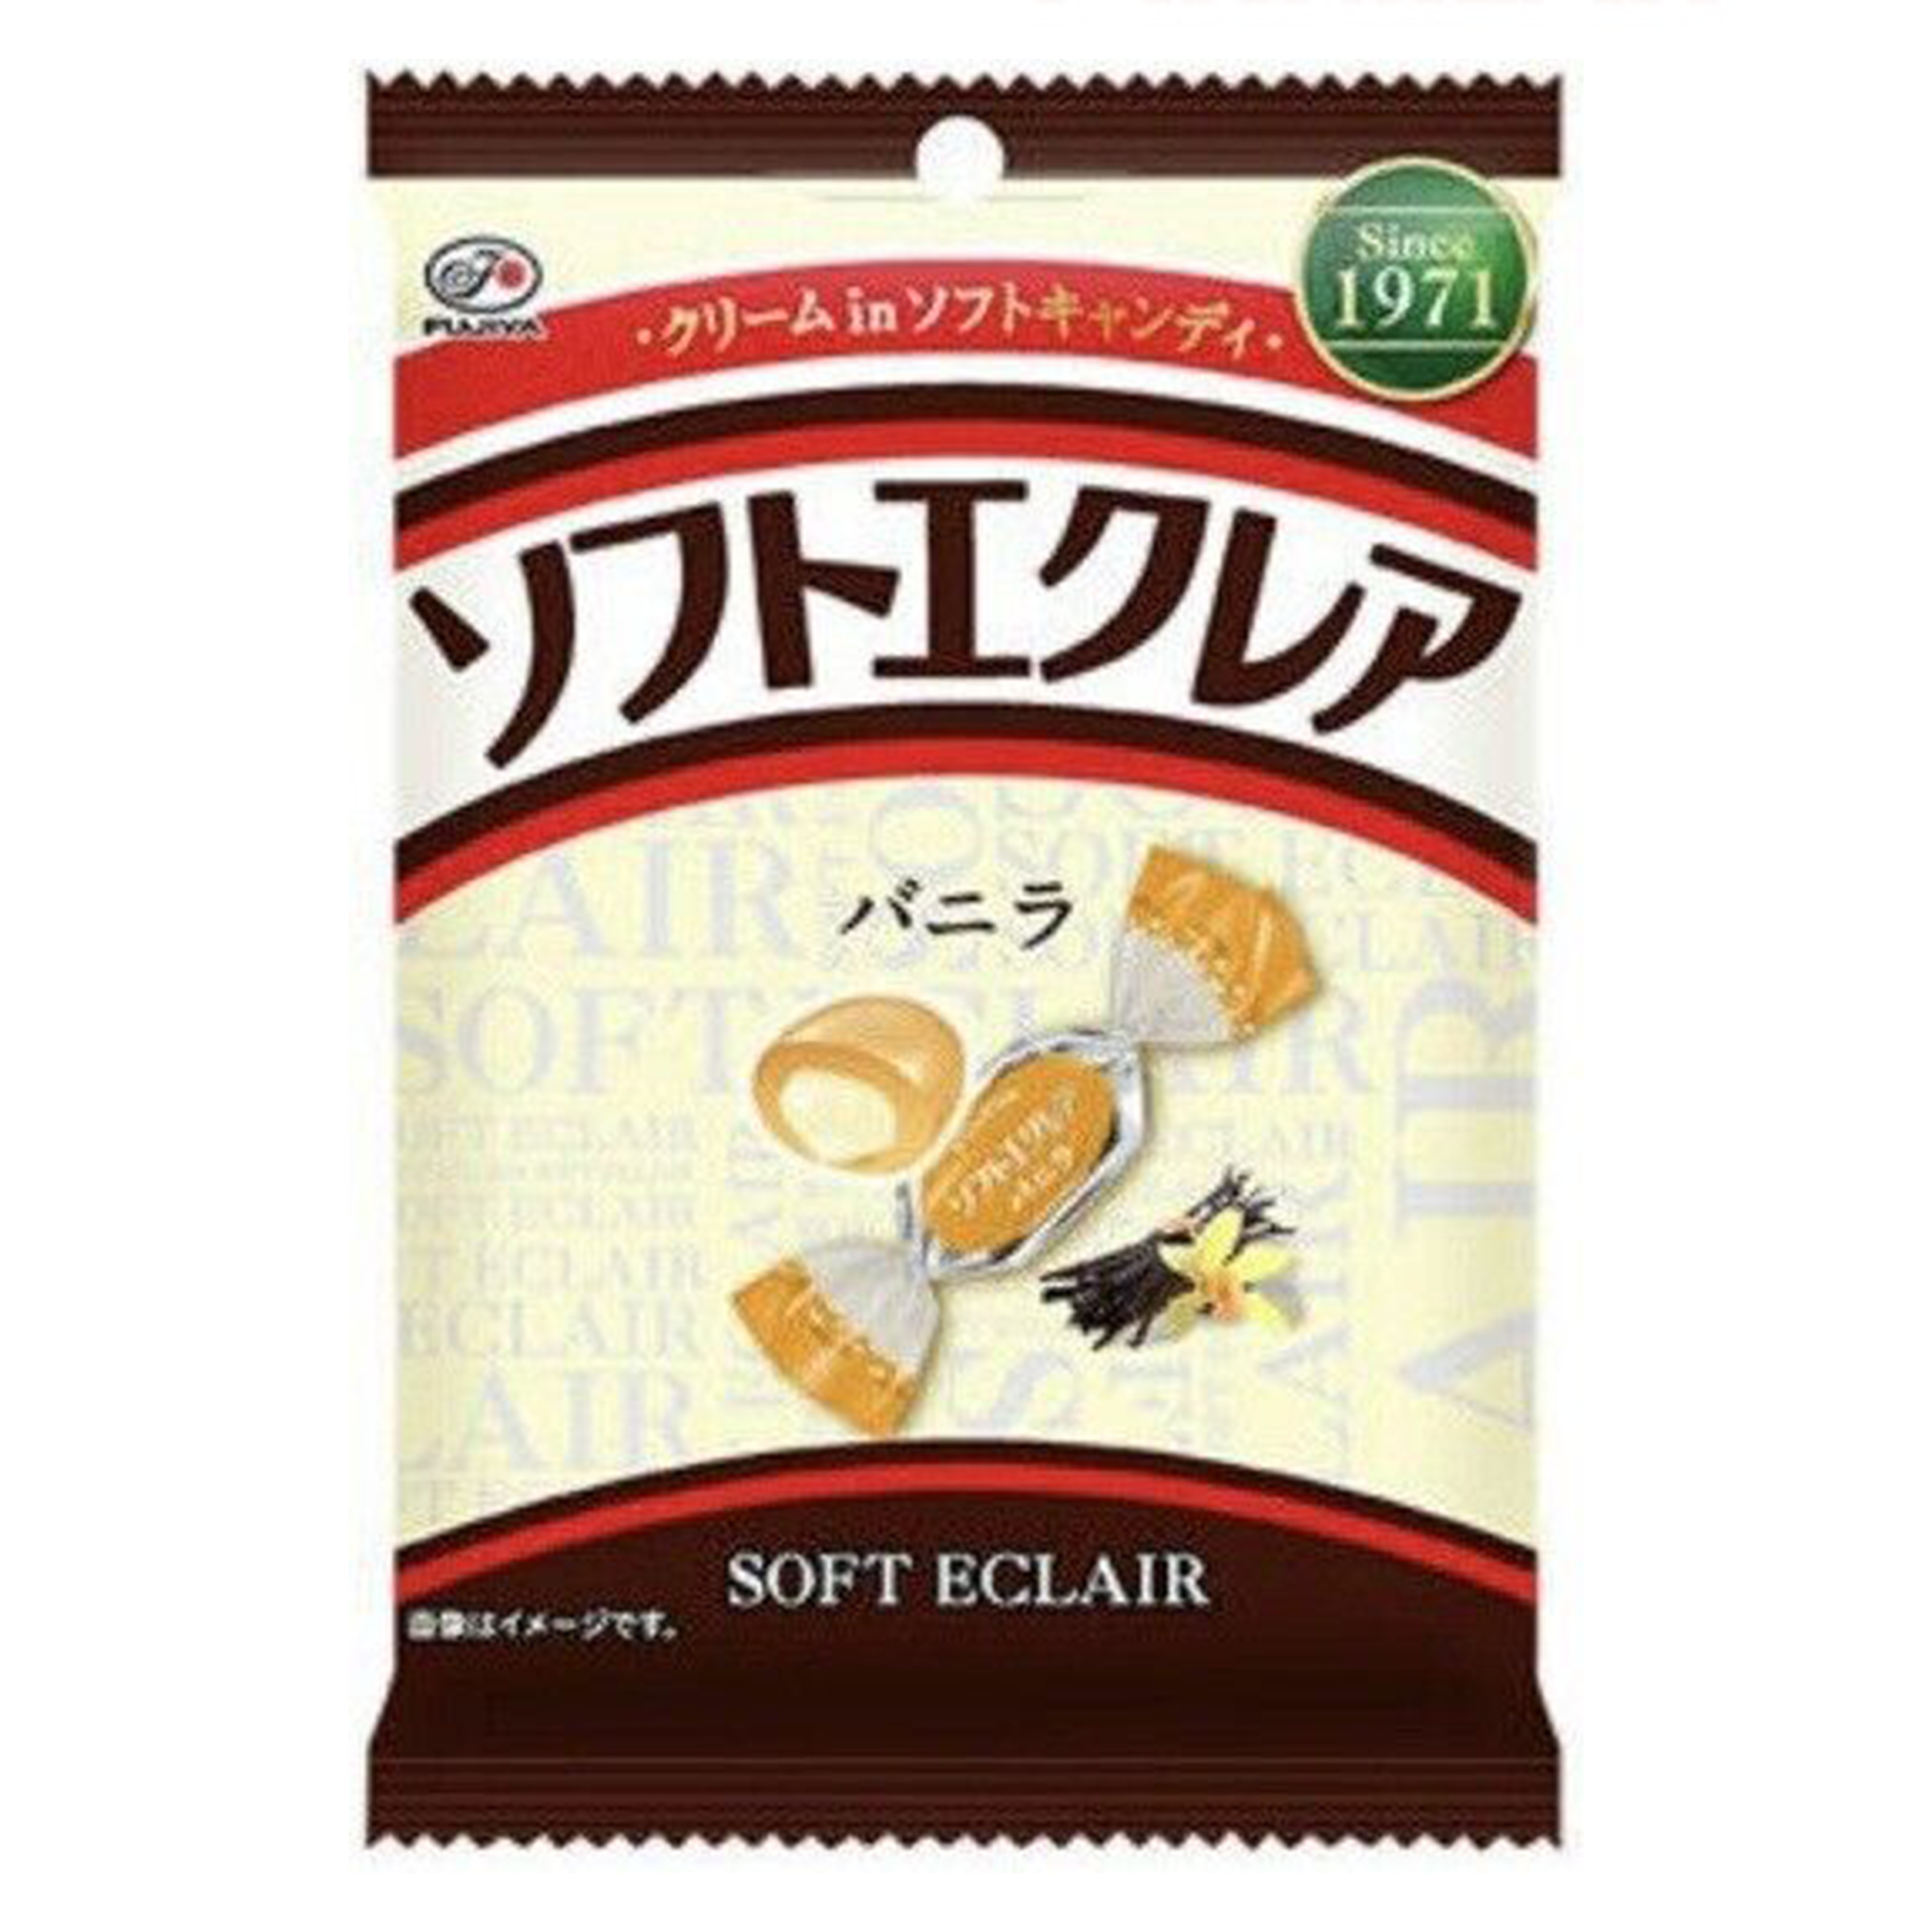 Japanese Soft Candy Eclair "Vanilla Cream Caramel" Candy